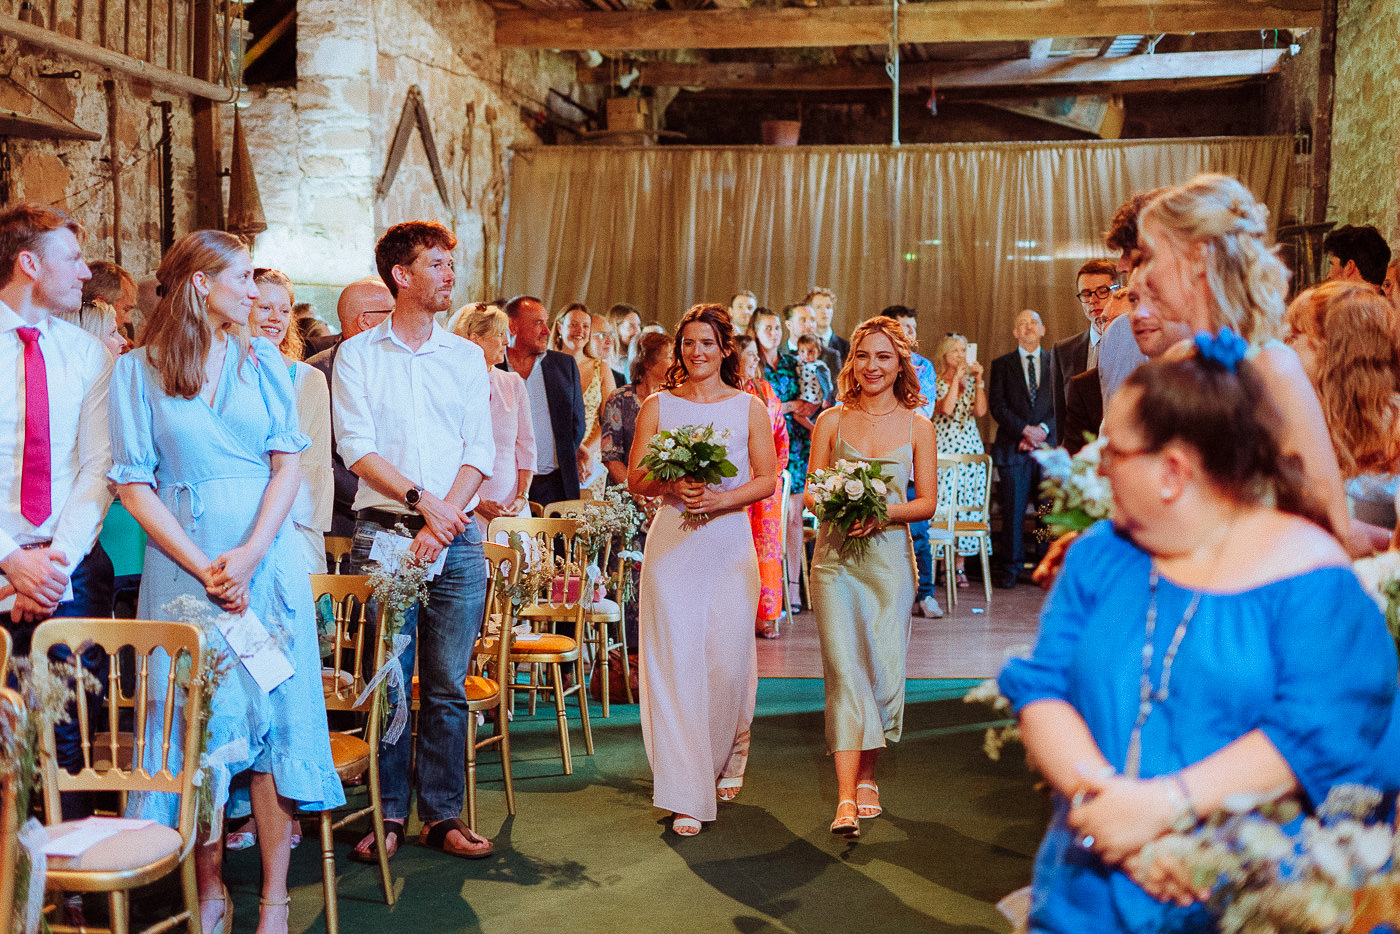 USK CASTLE WEDDING PHOTOGRAPHY FESTIVAL STYLE 031